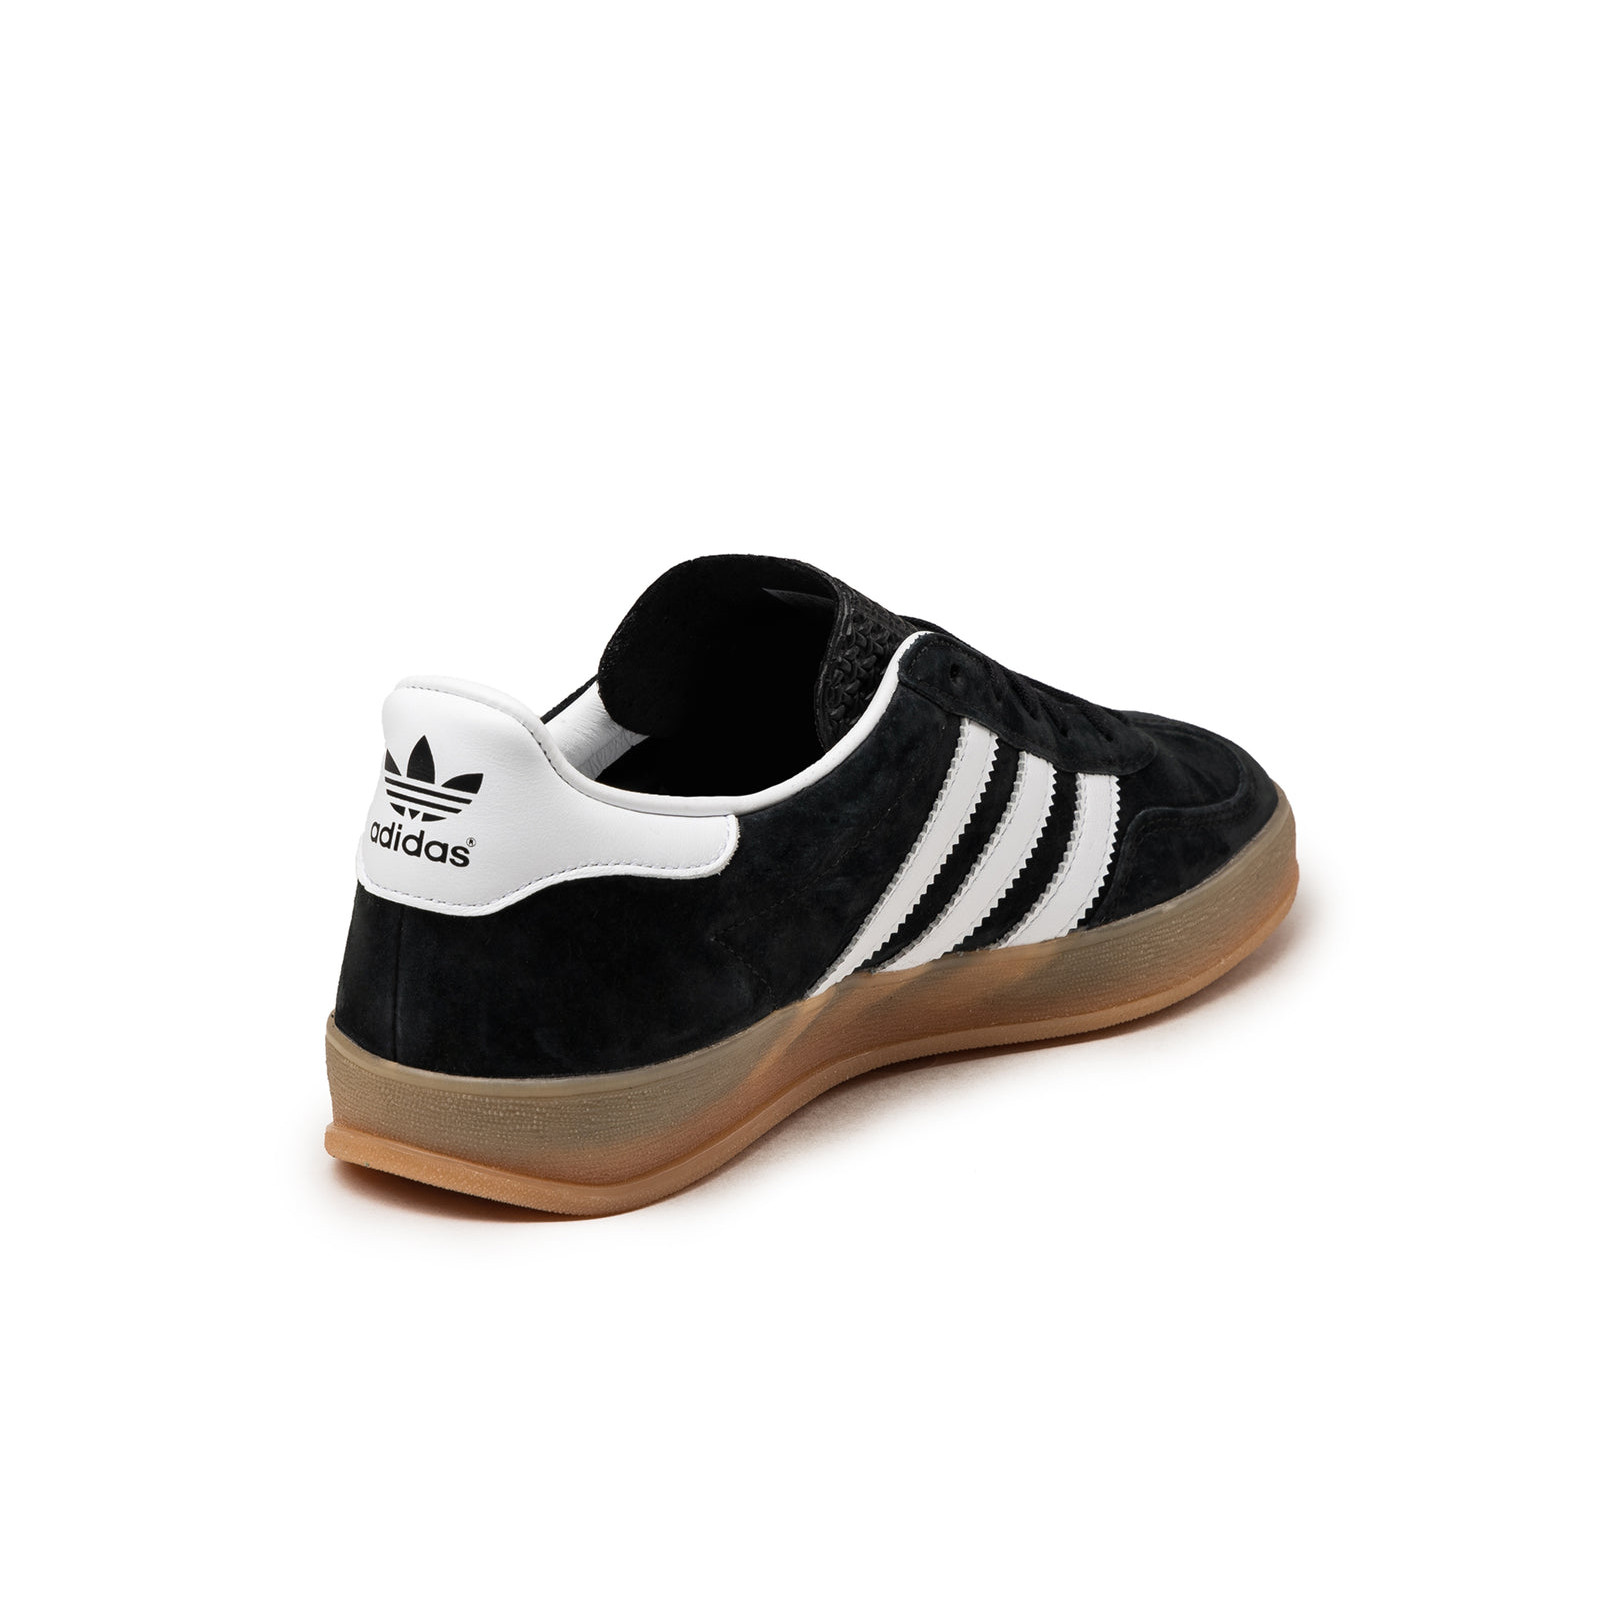 Adidas Gazelle Indoor
Black / White